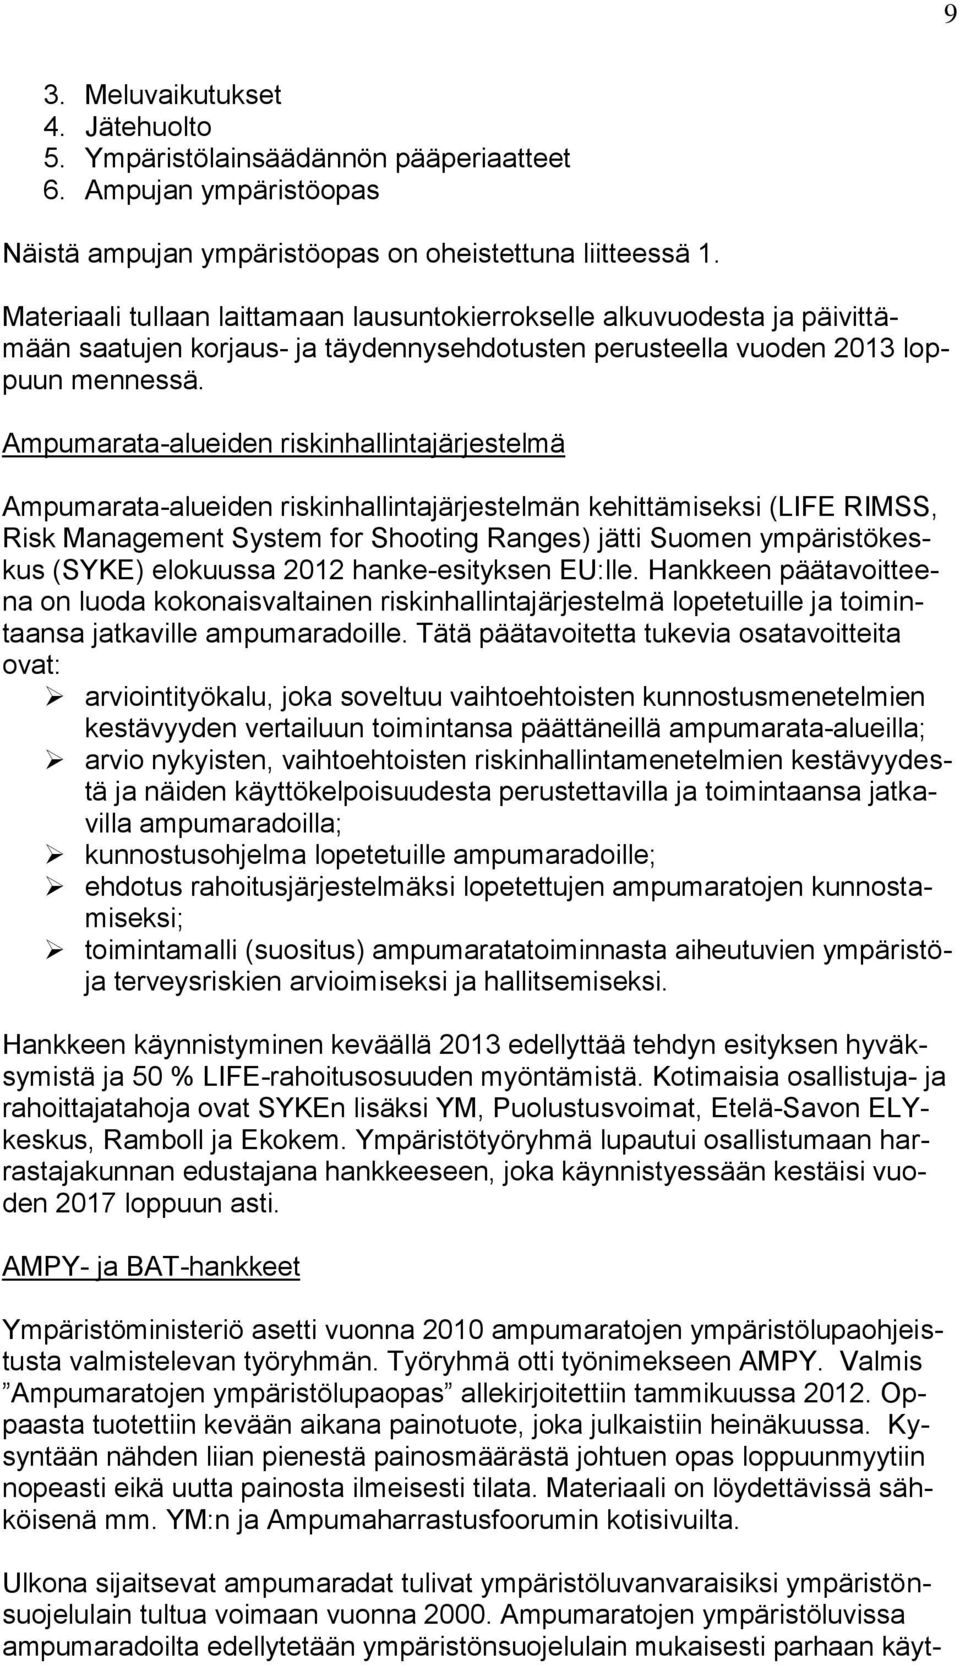 Ampumarata-alueiden riskinhallintajärjestelmä Ampumarata-alueiden riskinhallintajärjestelmän kehittämiseksi (LIFE RIMSS, Risk Management System for Shooting Ranges) jätti Suomen ympäristökeskus